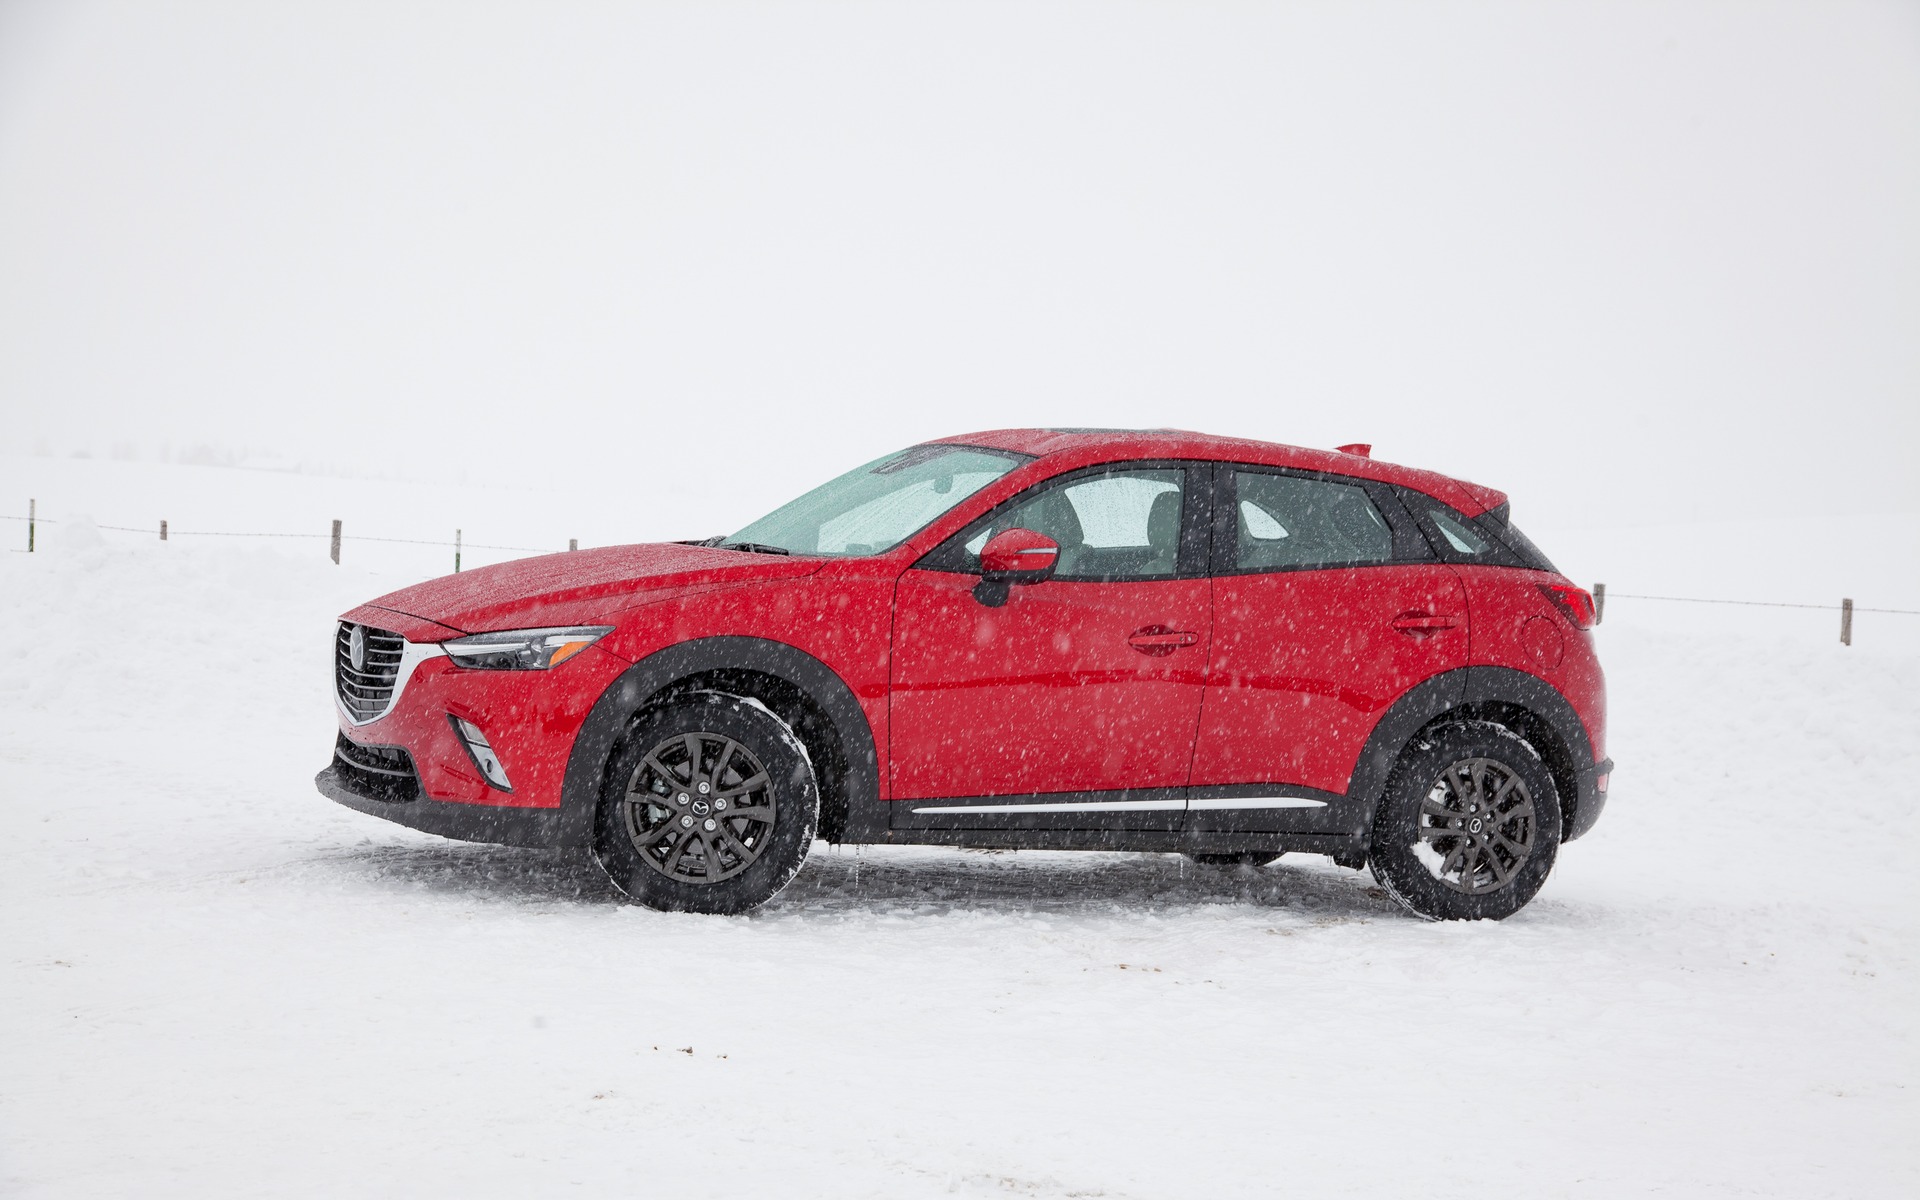 i-ACTIV, Mazda's intelligent all-wheel-drive system